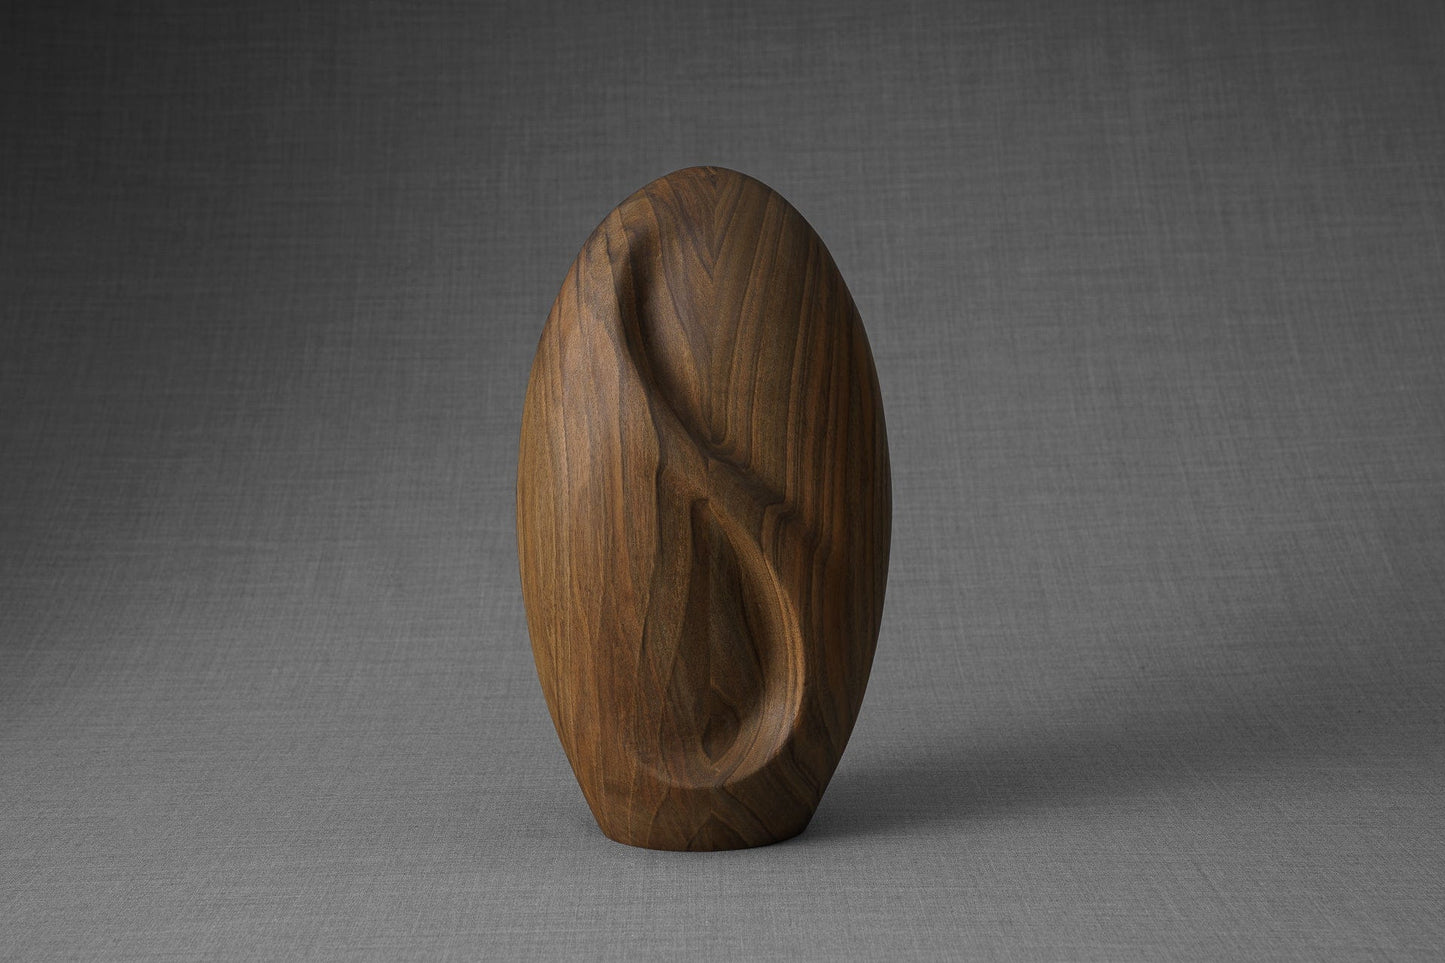 Pulvis Art Urns Adult Size Urn Wooden Urn for Ashes "Eternity" - Genuine Walnut